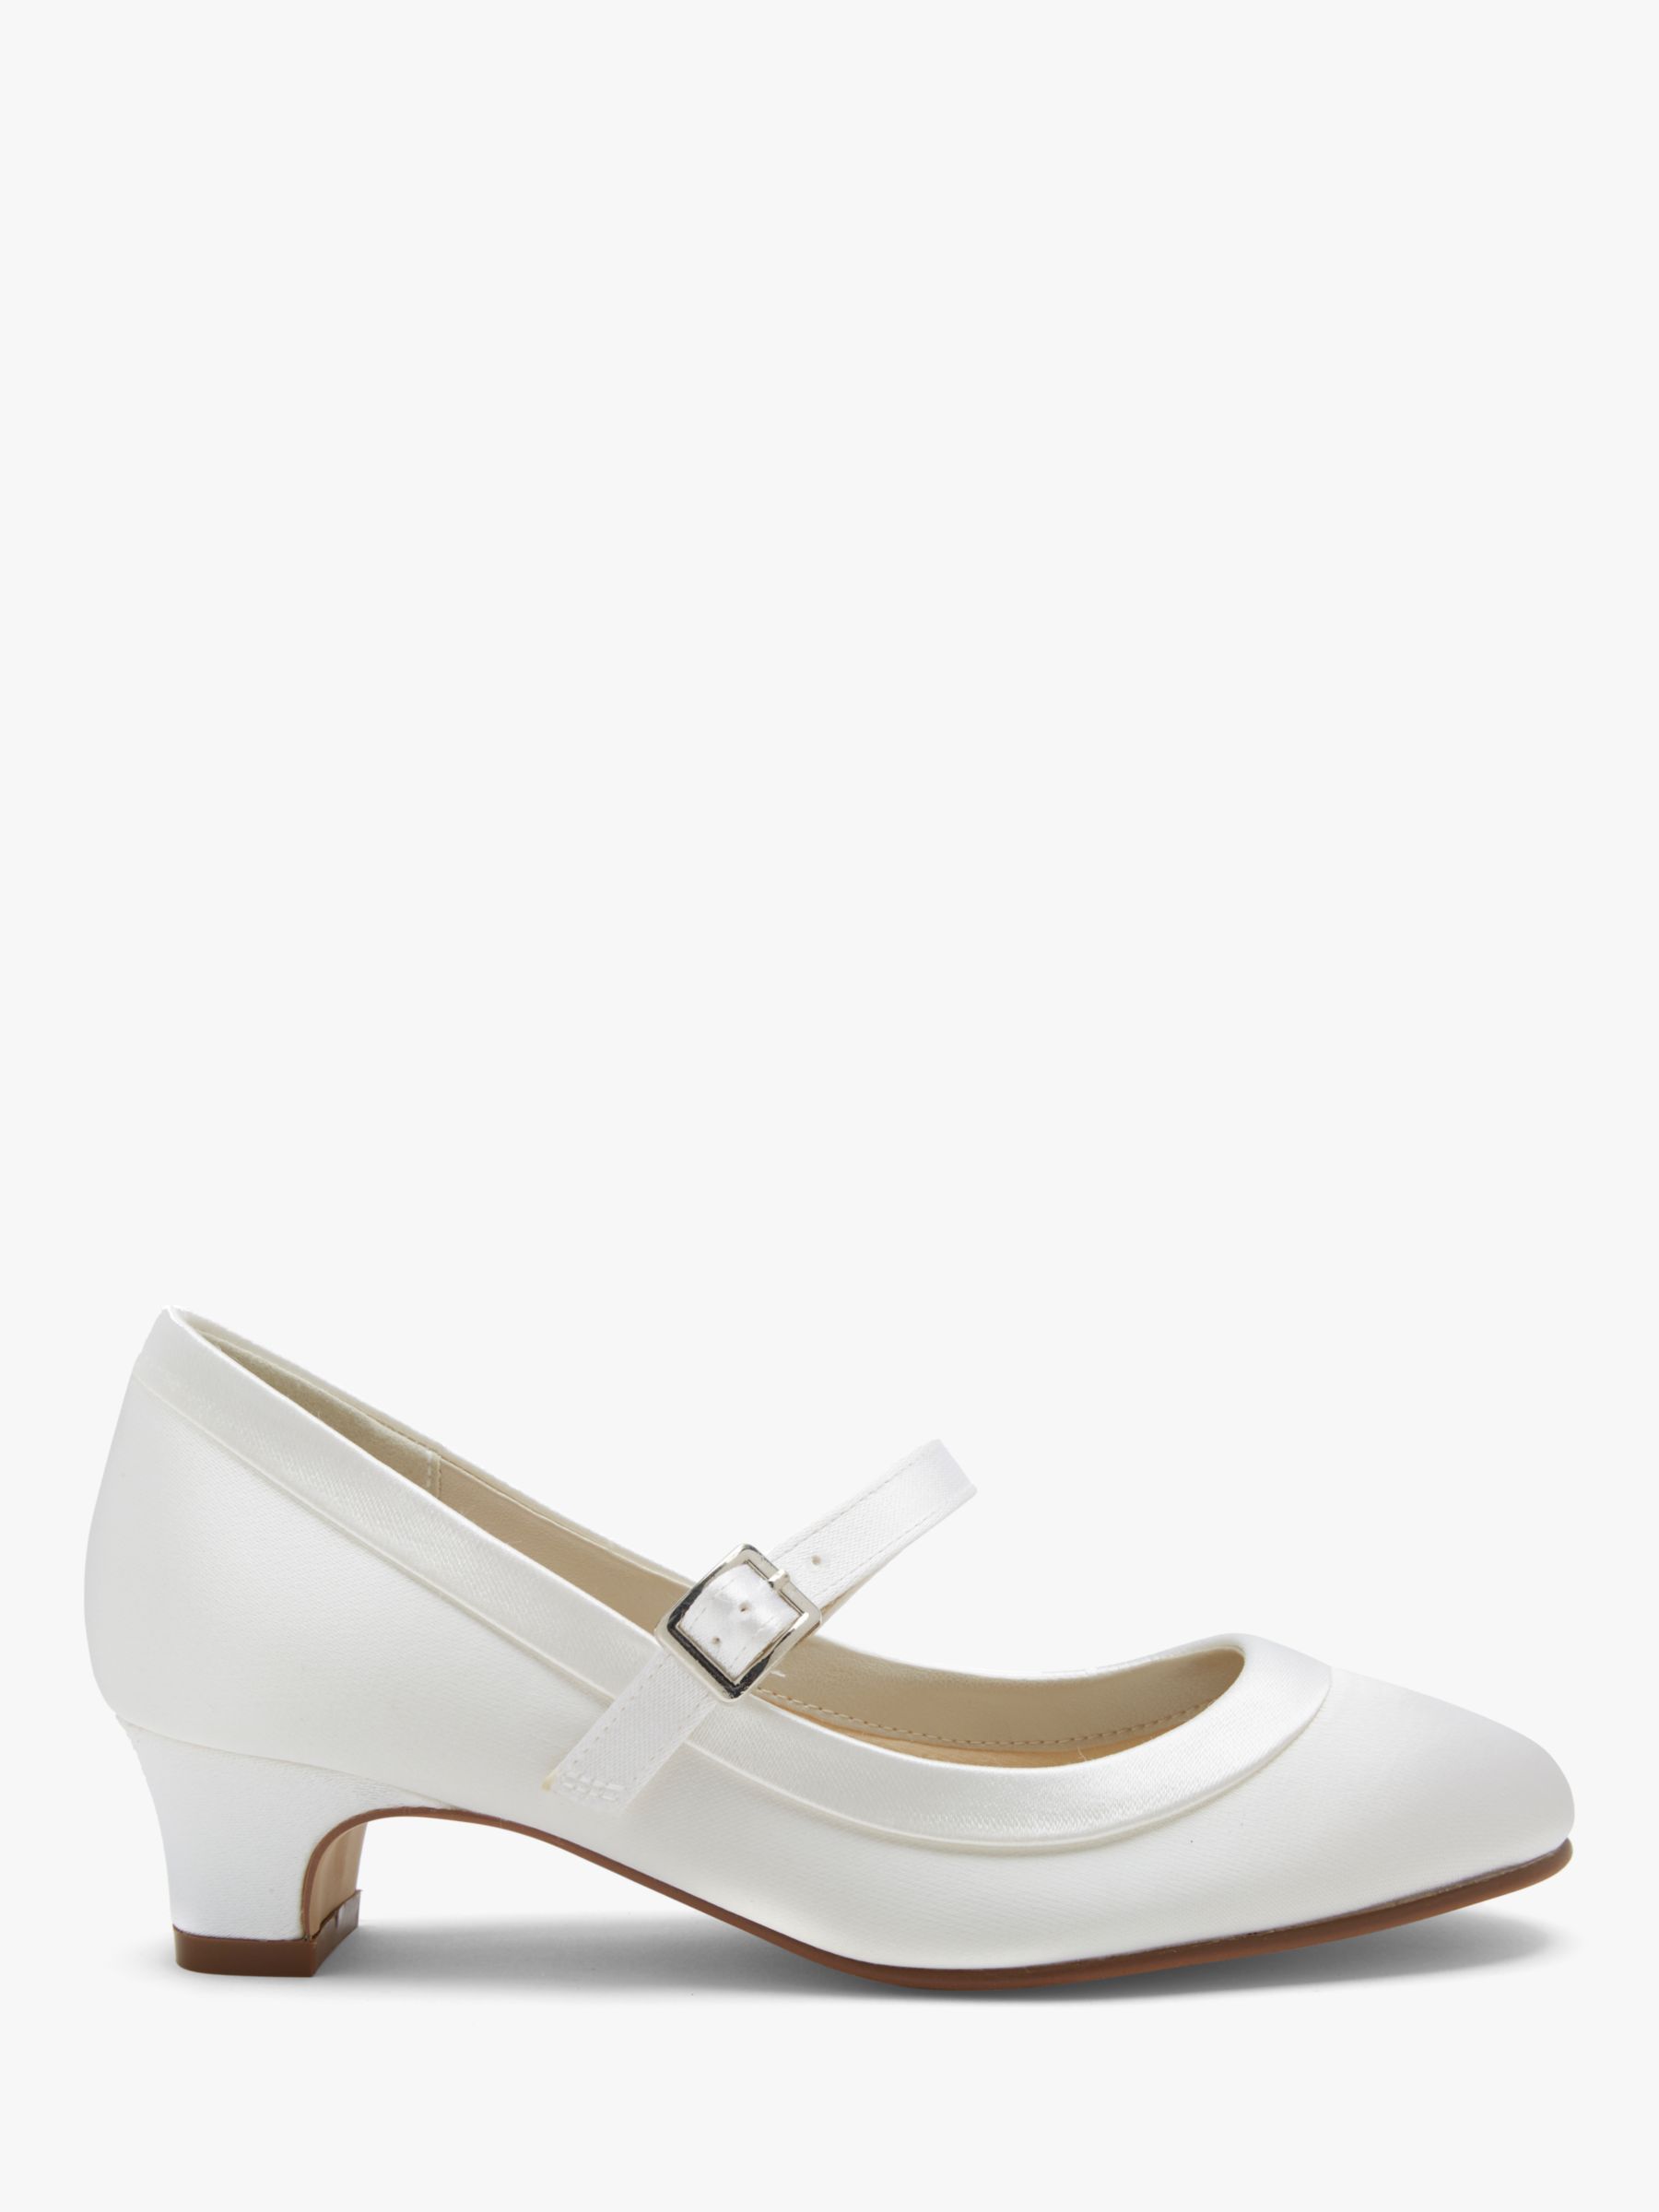 Rainbow Club Maisie Bridesmaids' Shoes, White at John Lewis & Partners